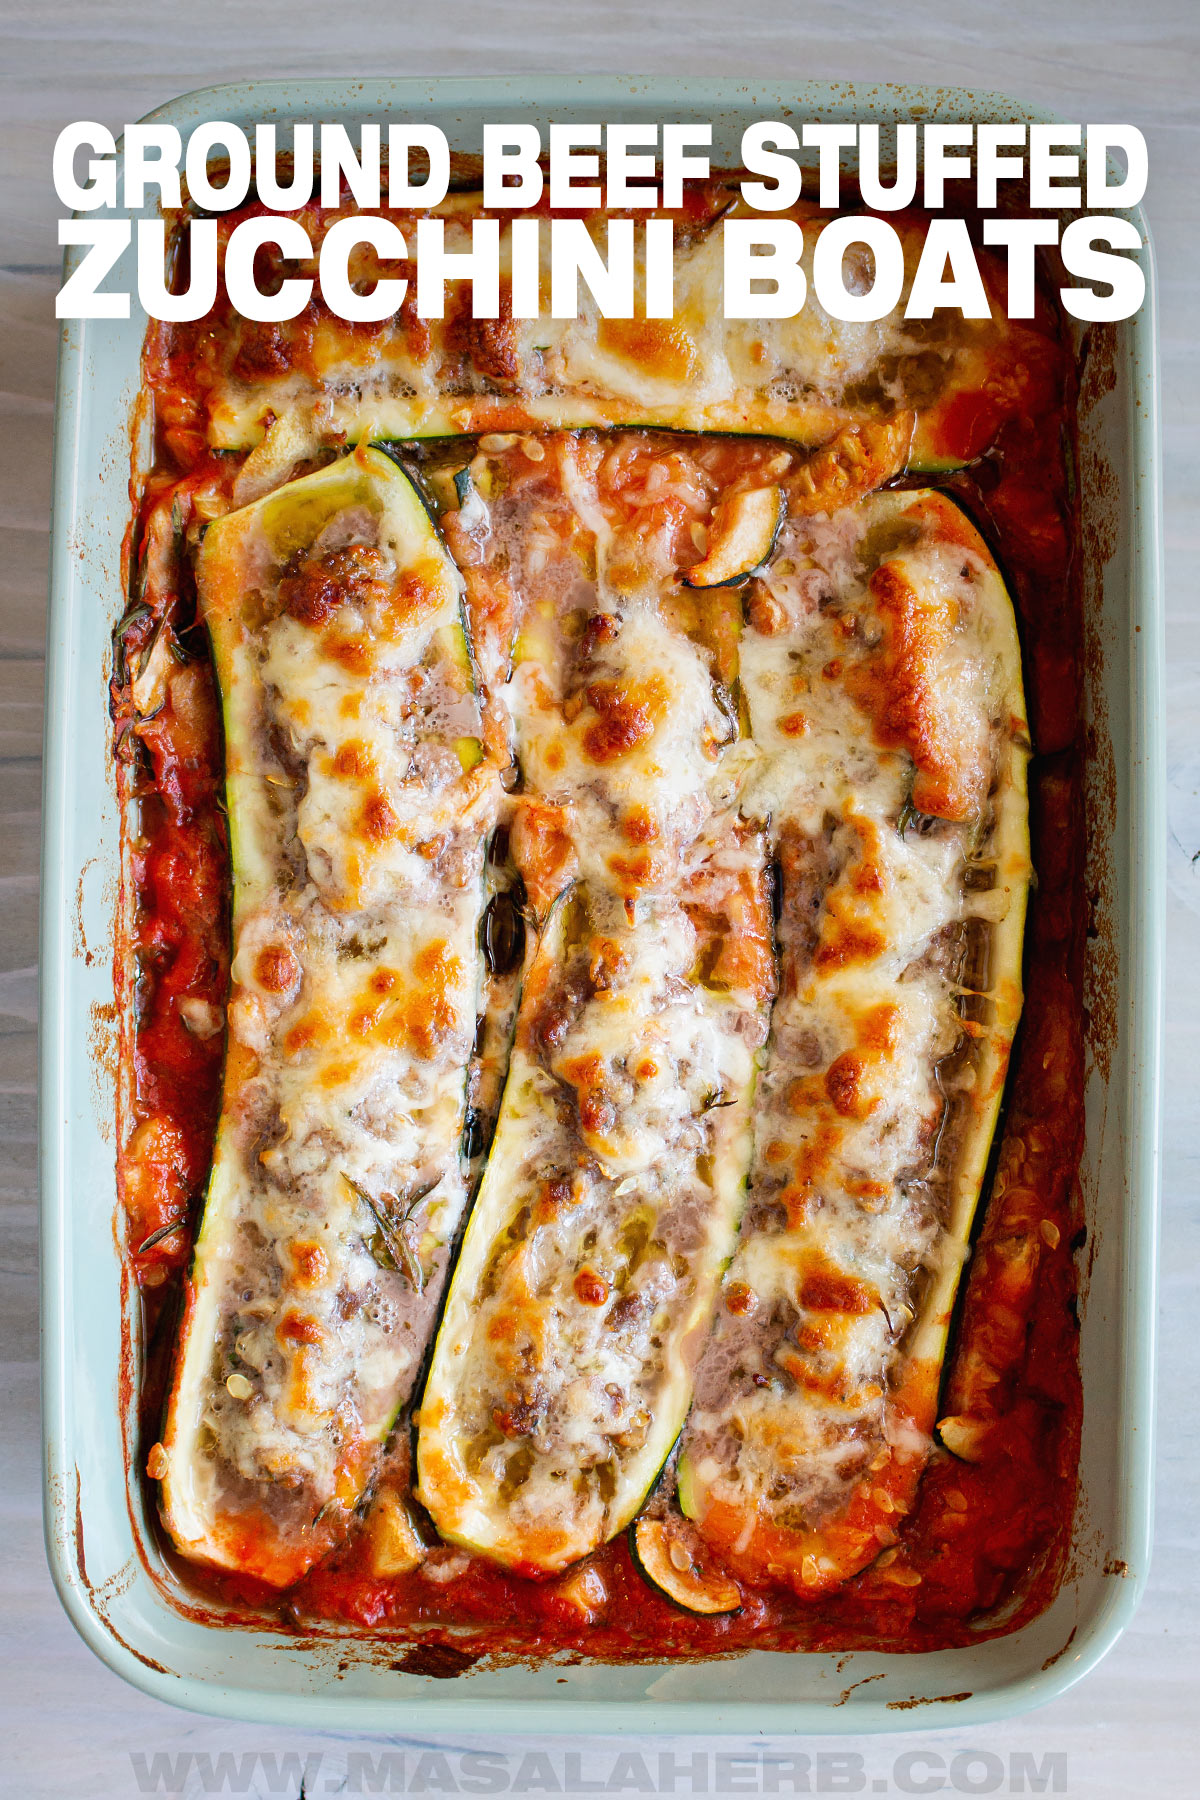 Ground Beef Stuffed Zucchini Boats Recipe cover image